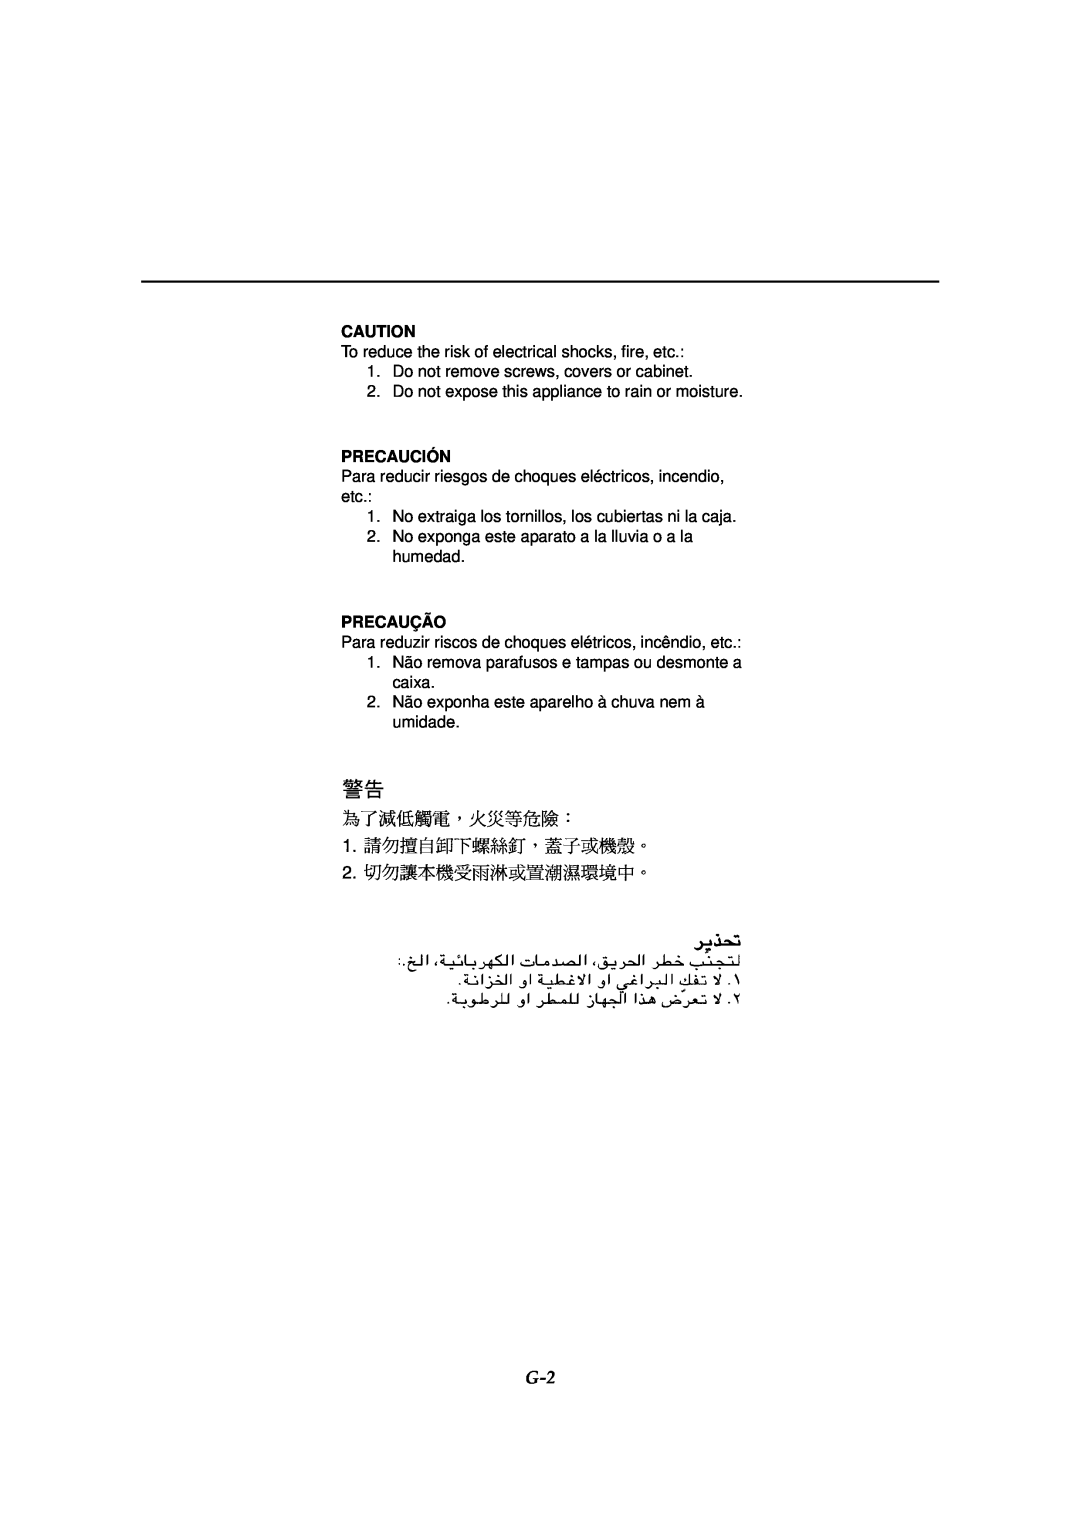 JVC MX-J333VU manual Precaución, Precaução 